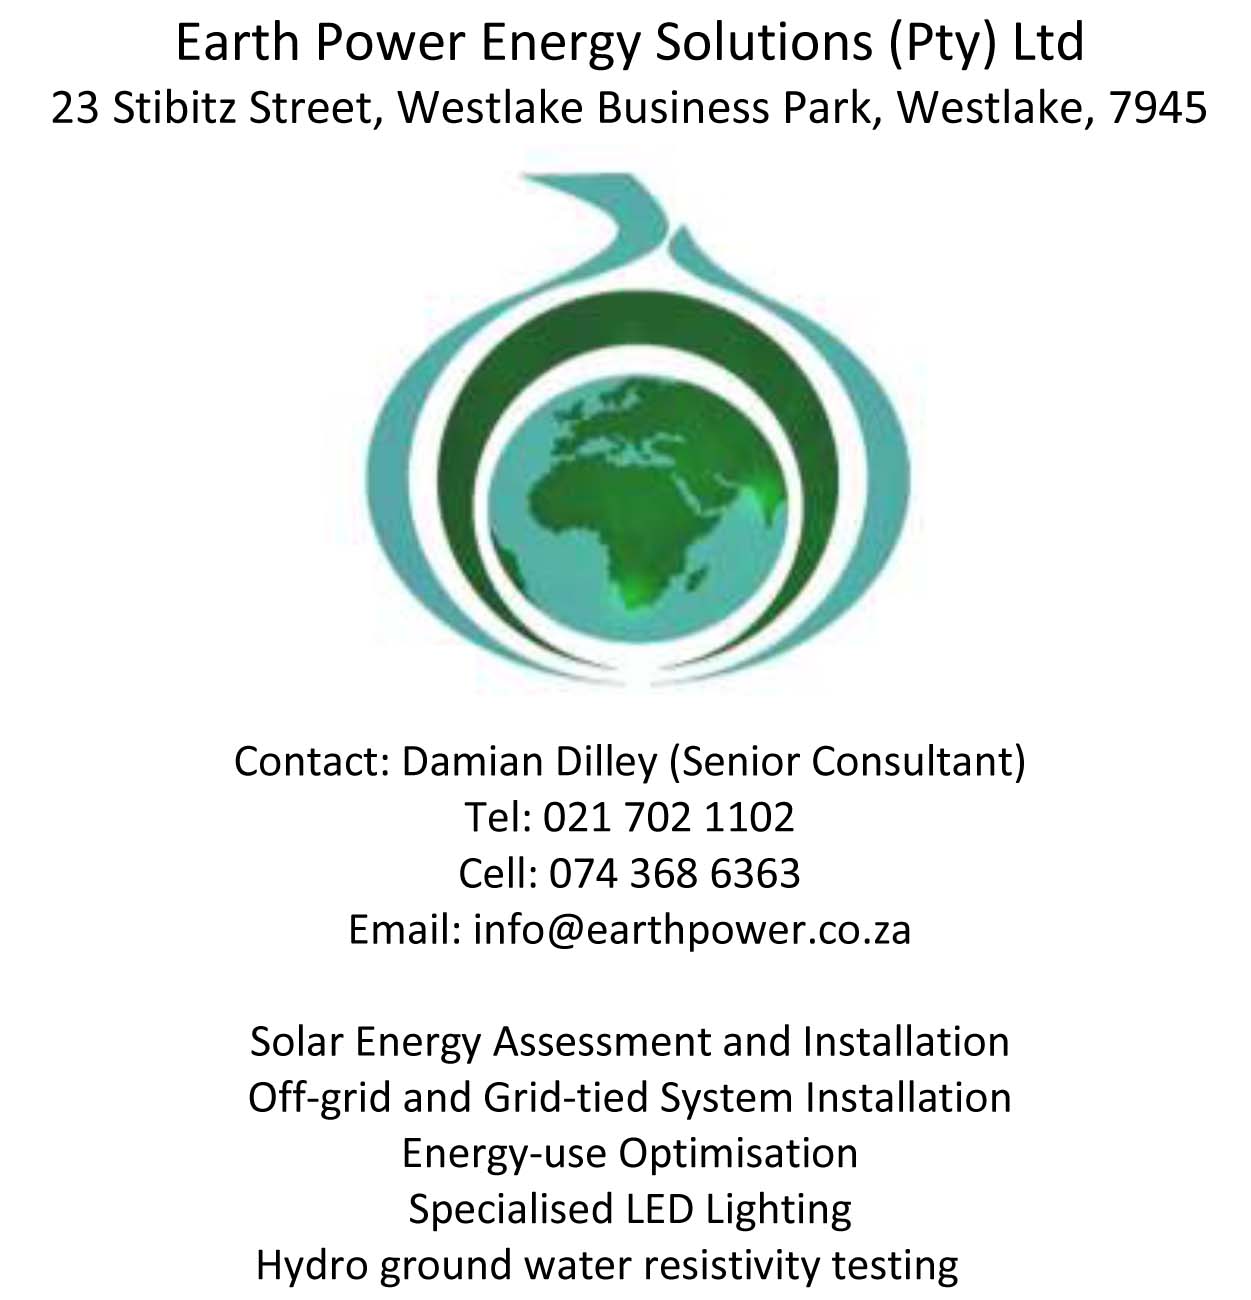 Earth Power Energy Solutions Blurb